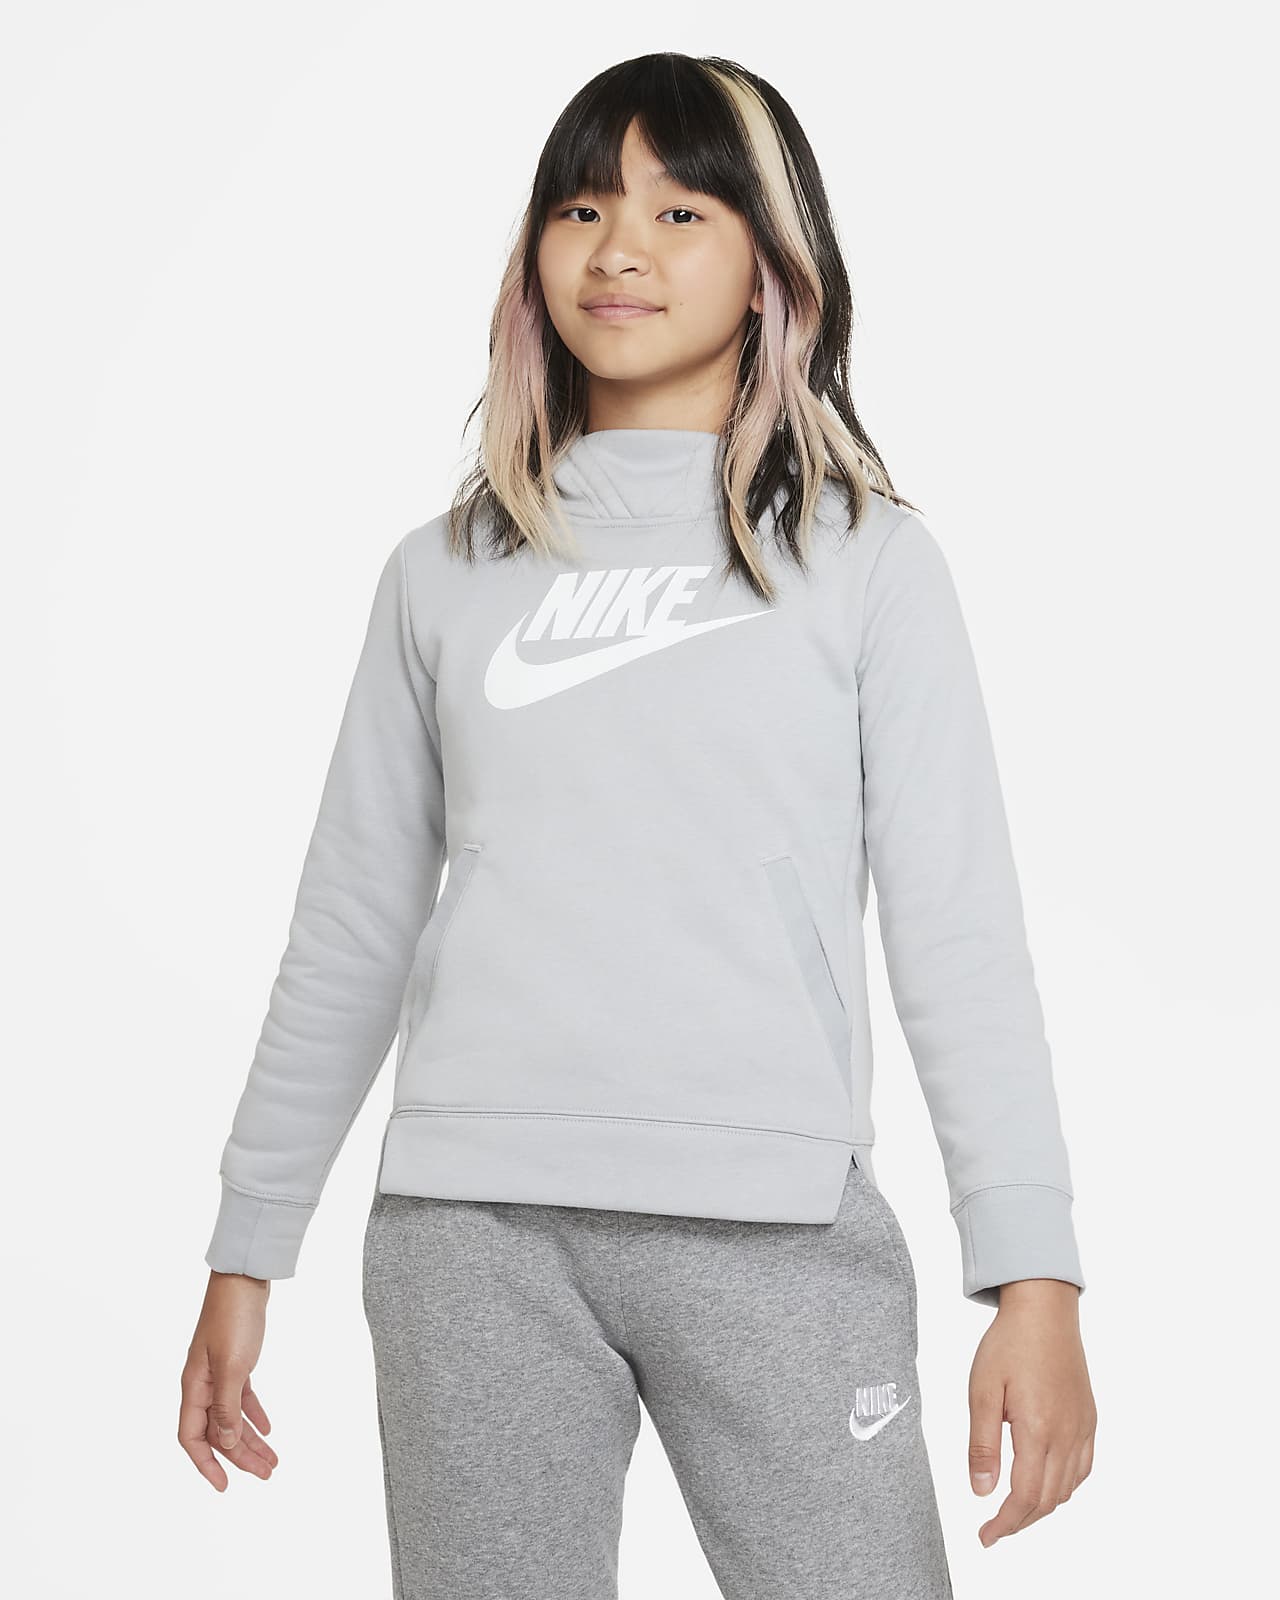 Galleta cobija Calumnia Nike Sportswear Girls' Pullover Hoodie. Nike.com